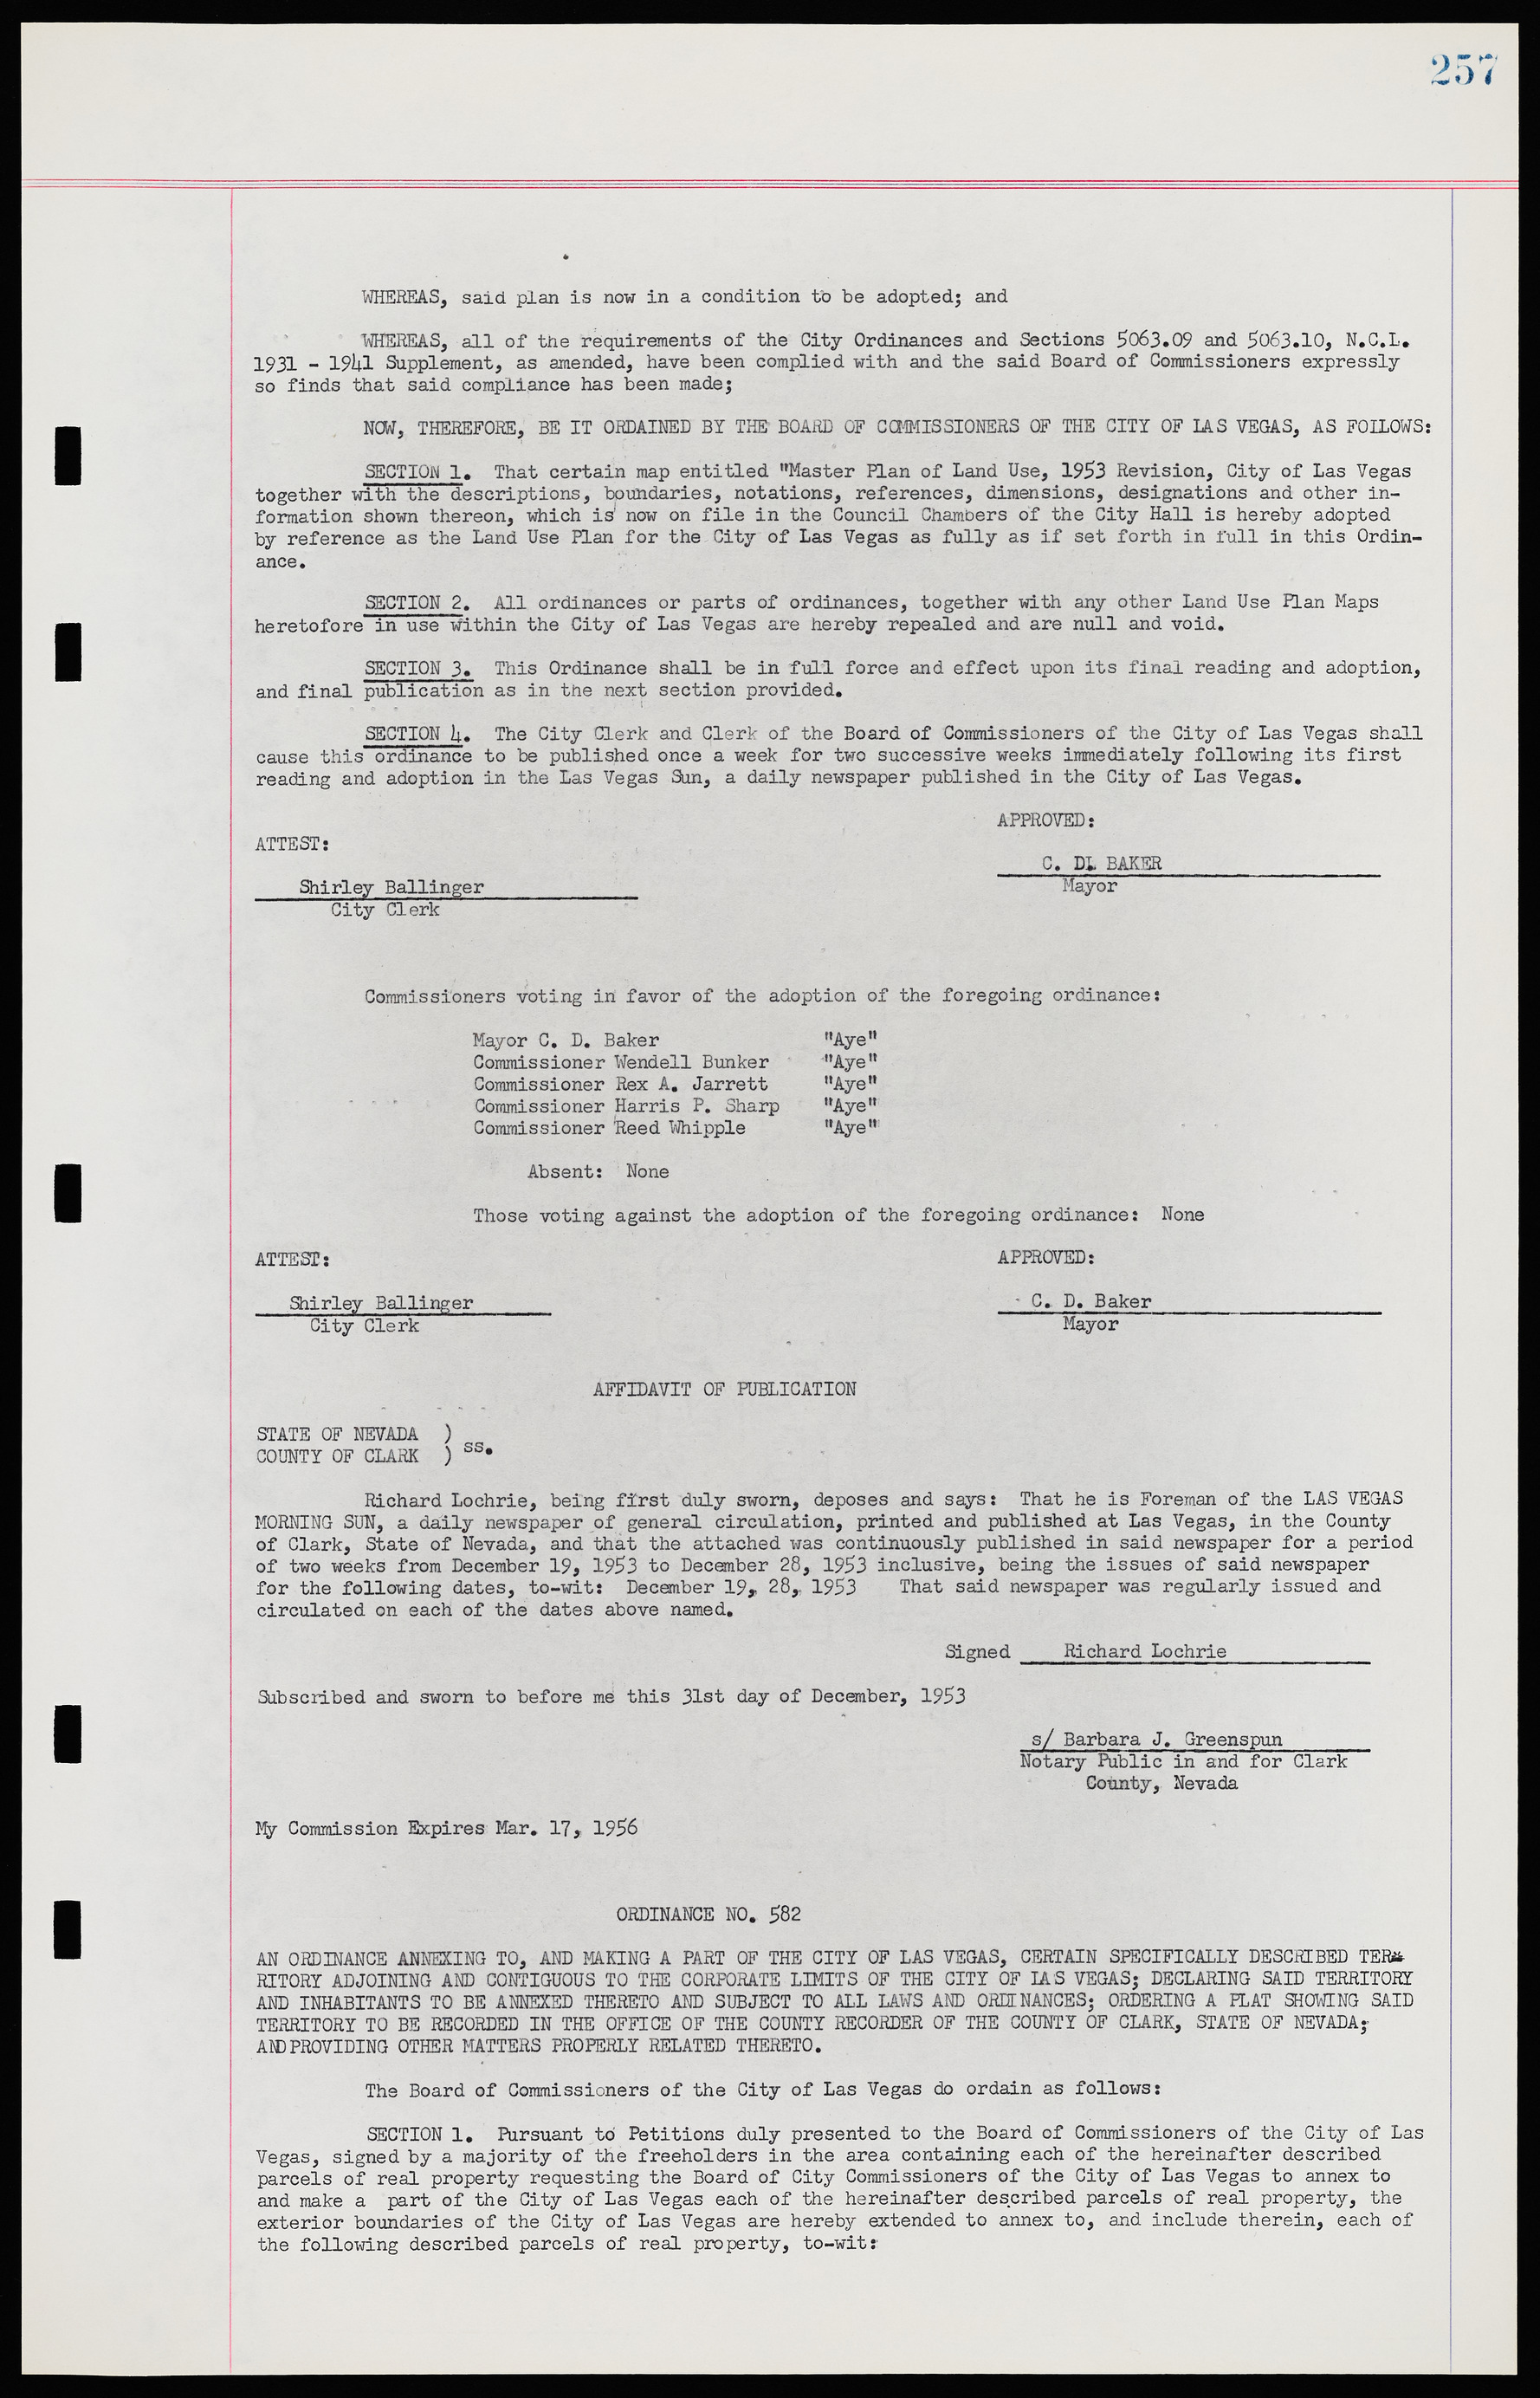 Las Vegas City Ordinances, November 13, 1950 to August 6, 1958, lvc000015-265